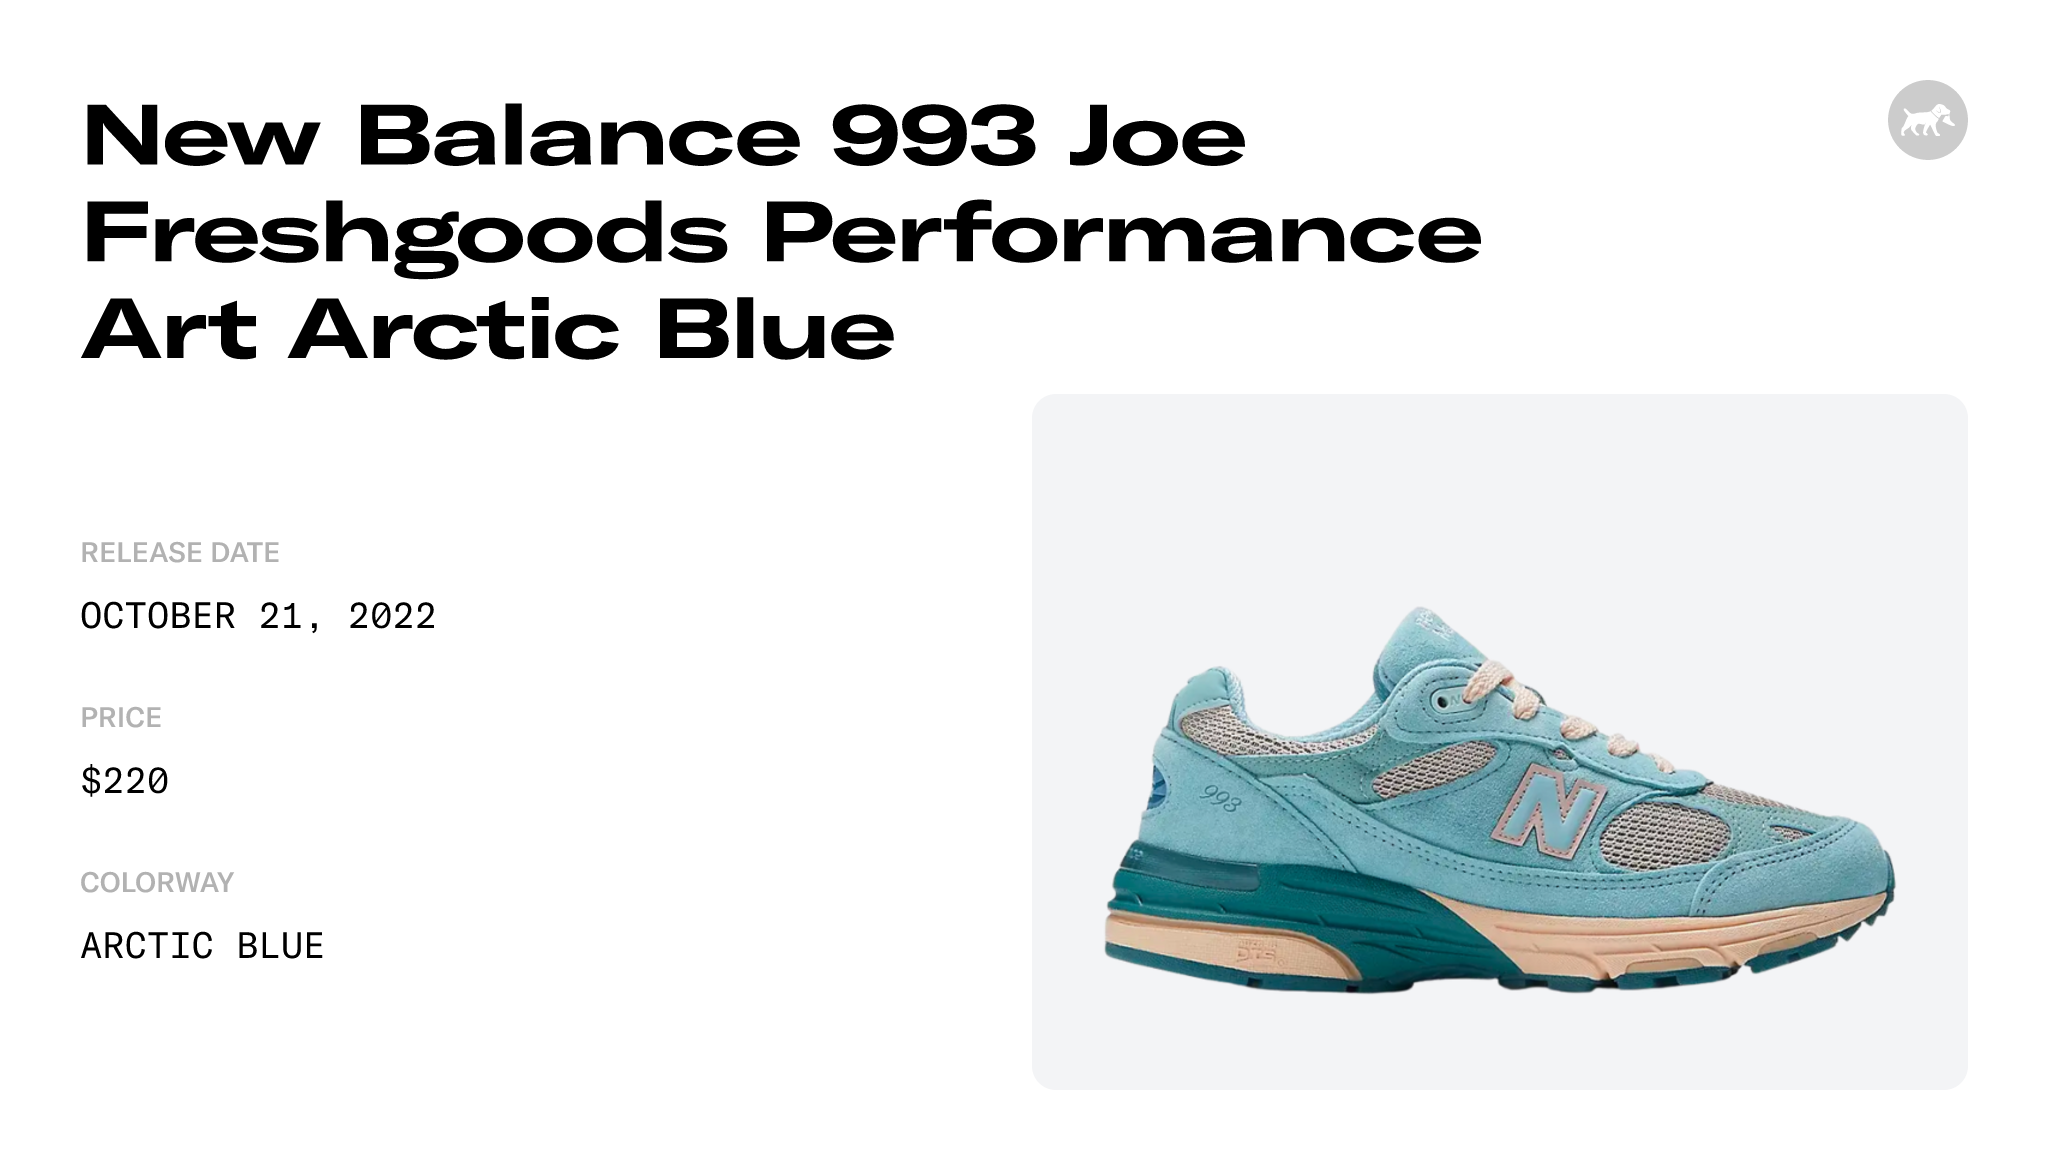 New Balance 993 Joe Freshgoods Performance Art Arctic Blue Raffles